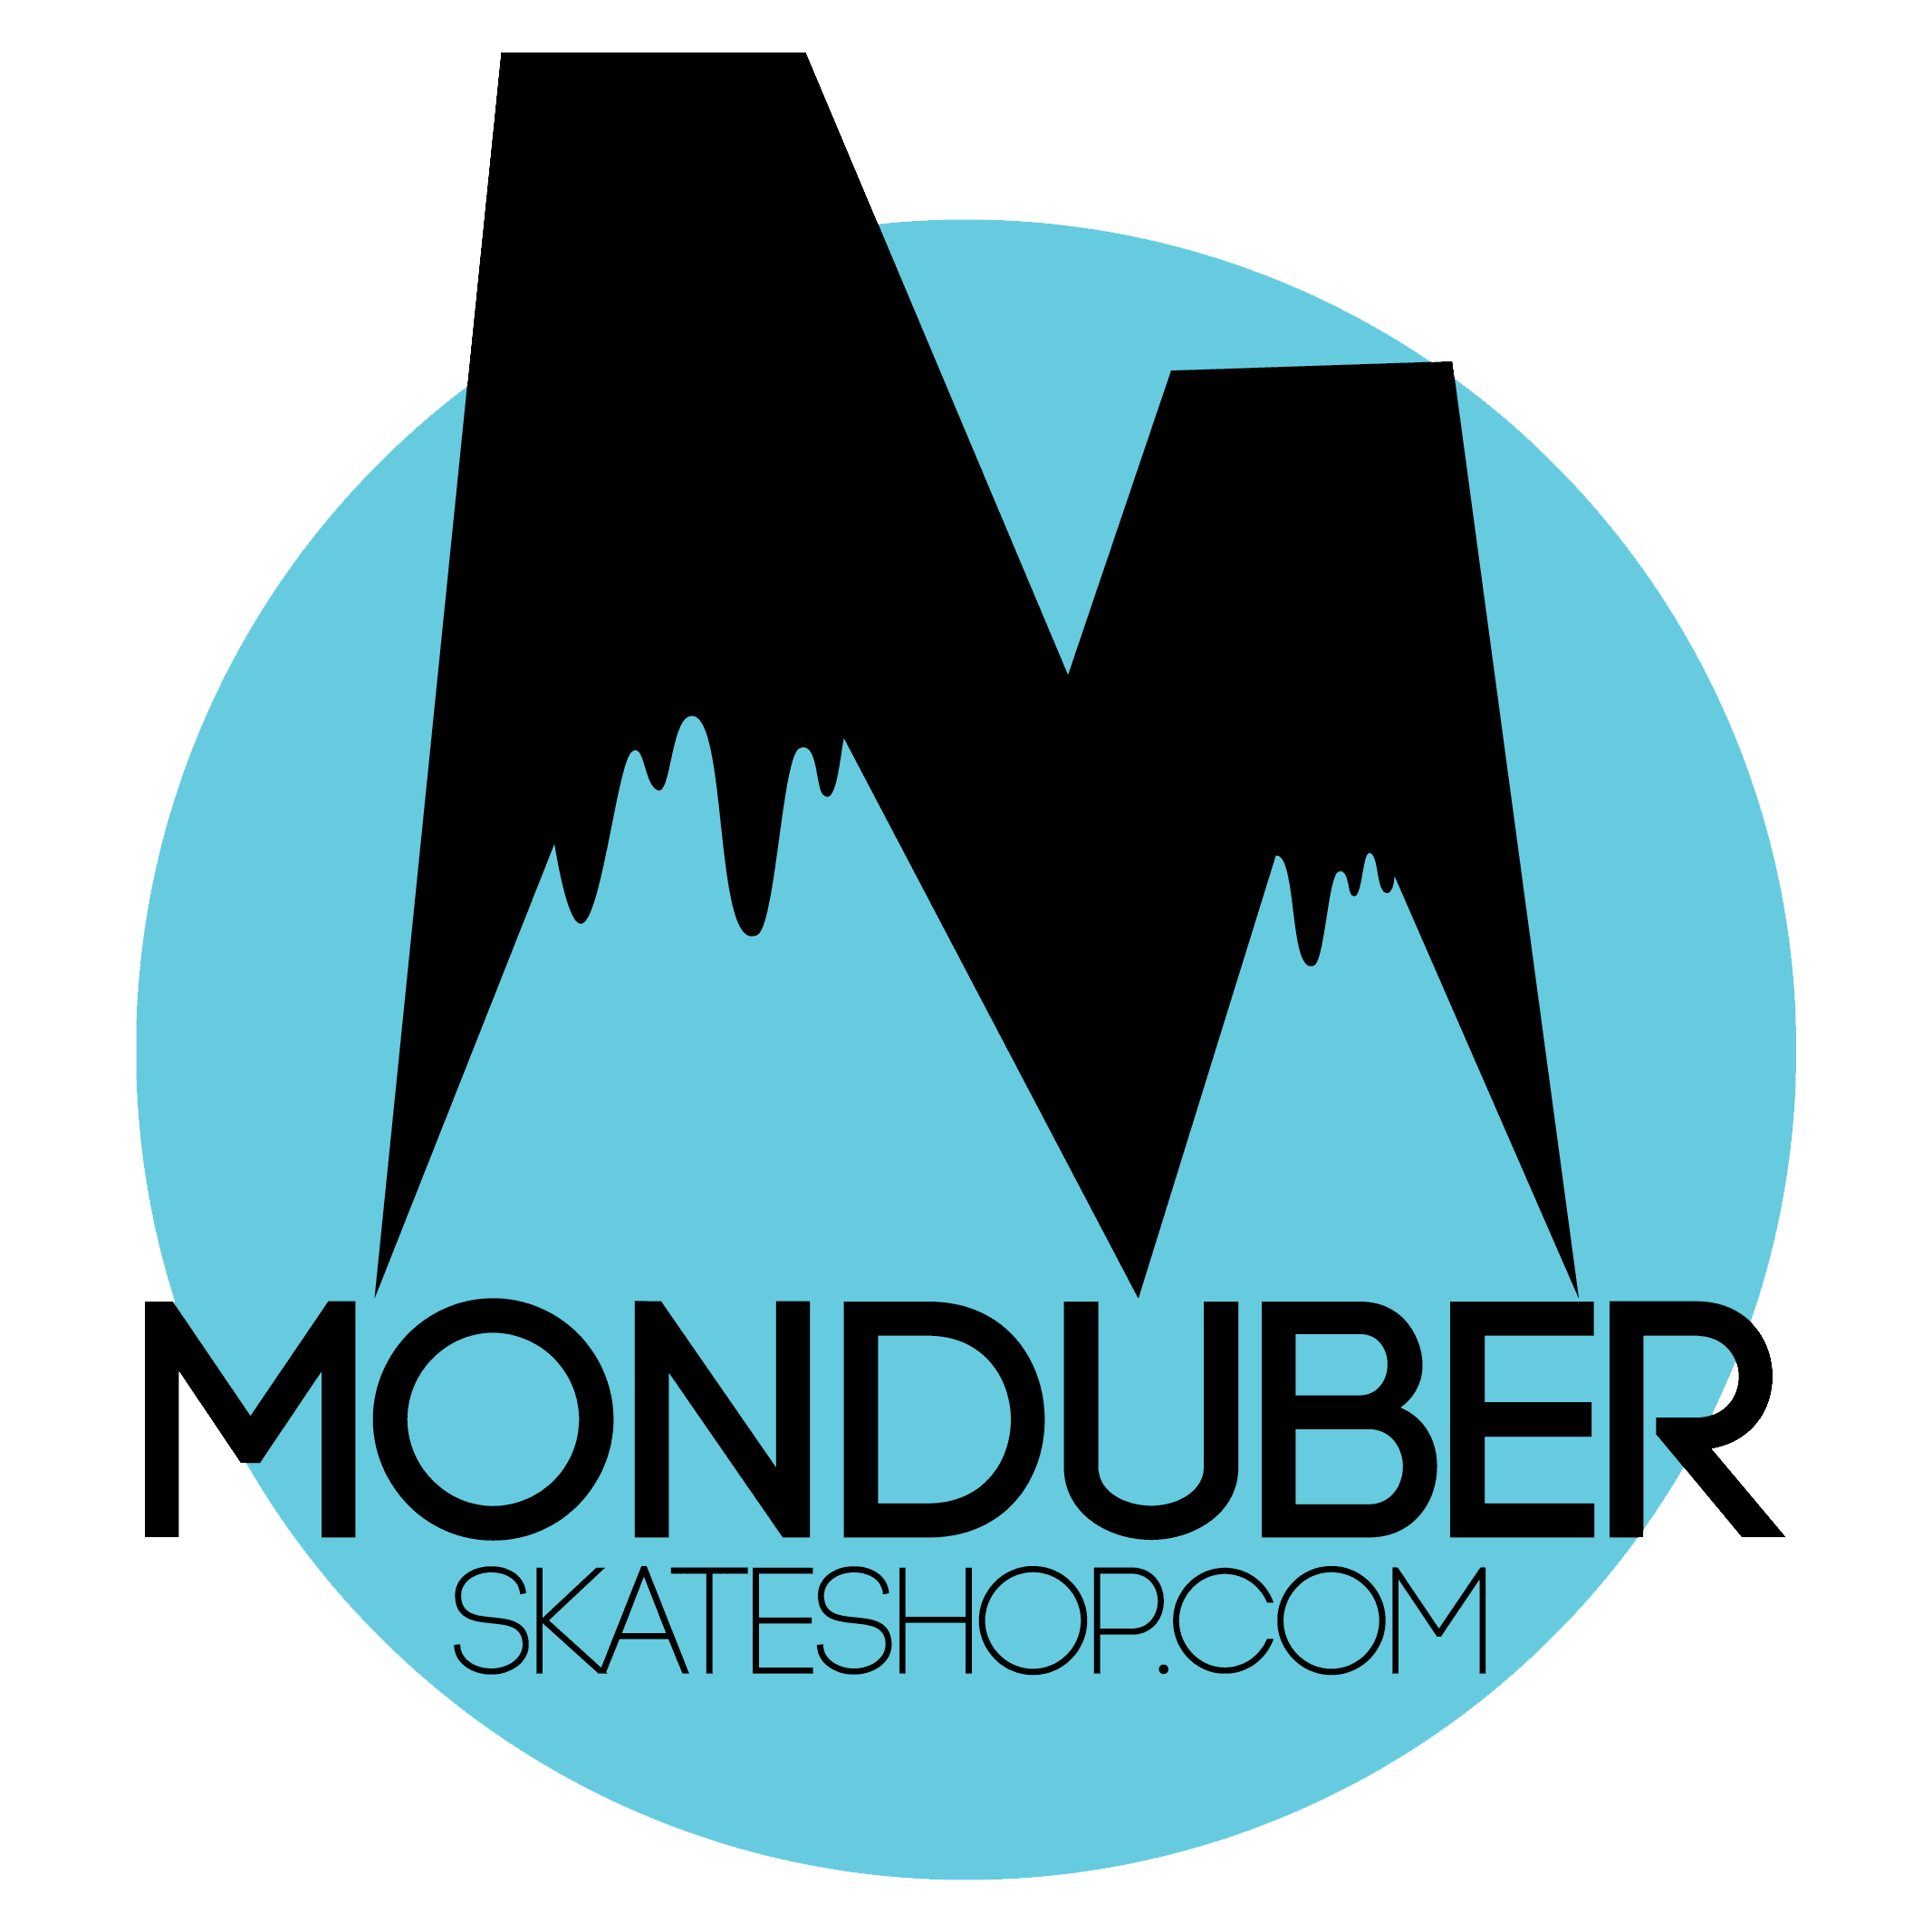 Monduber Skate Shop